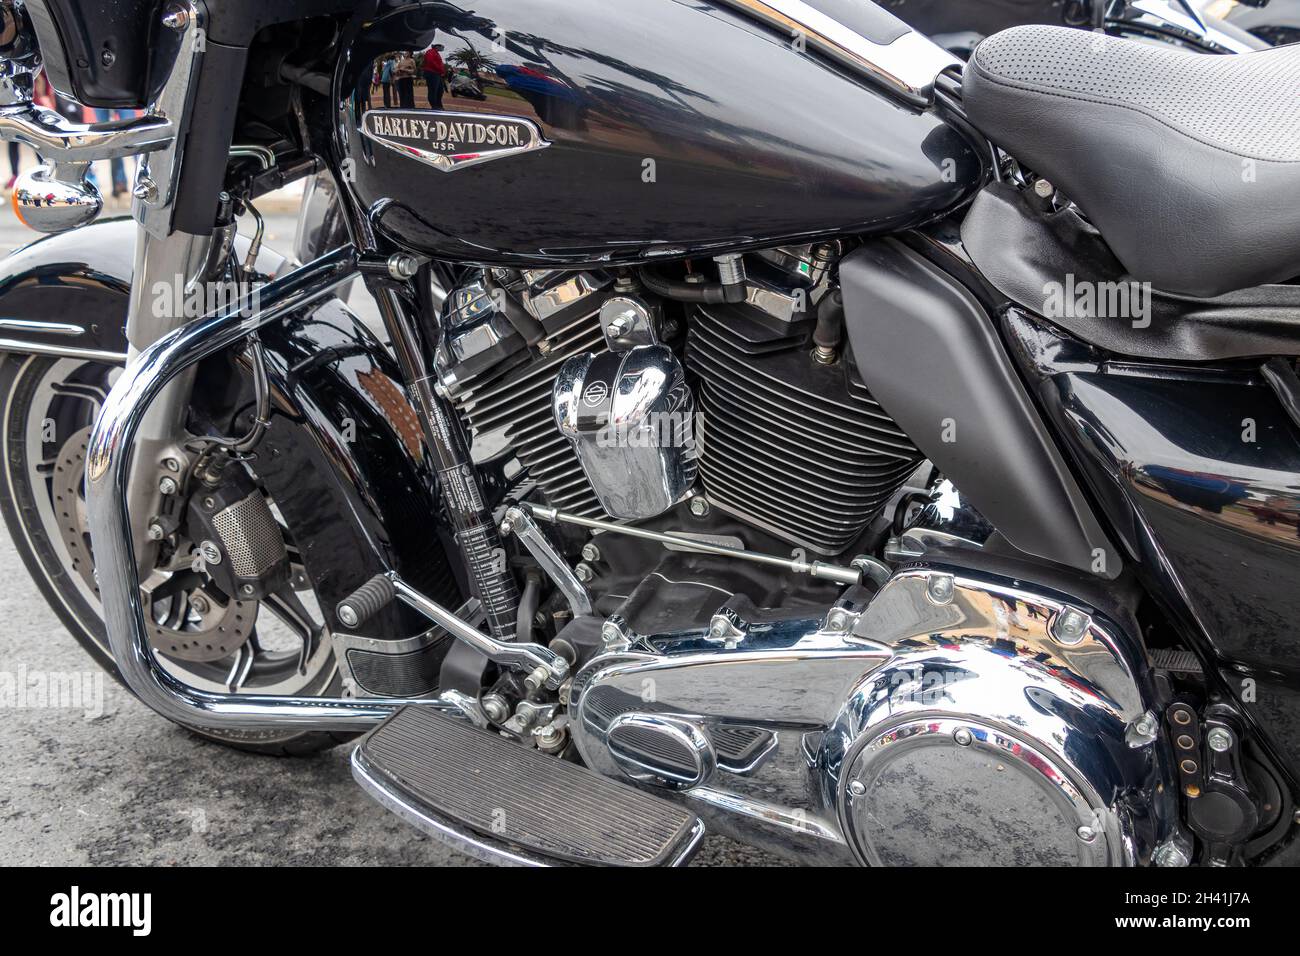 Huelva, Spain - October 30, 2021: Harley Davidson motorcycle of Spanish Royal Guard Stock Photo